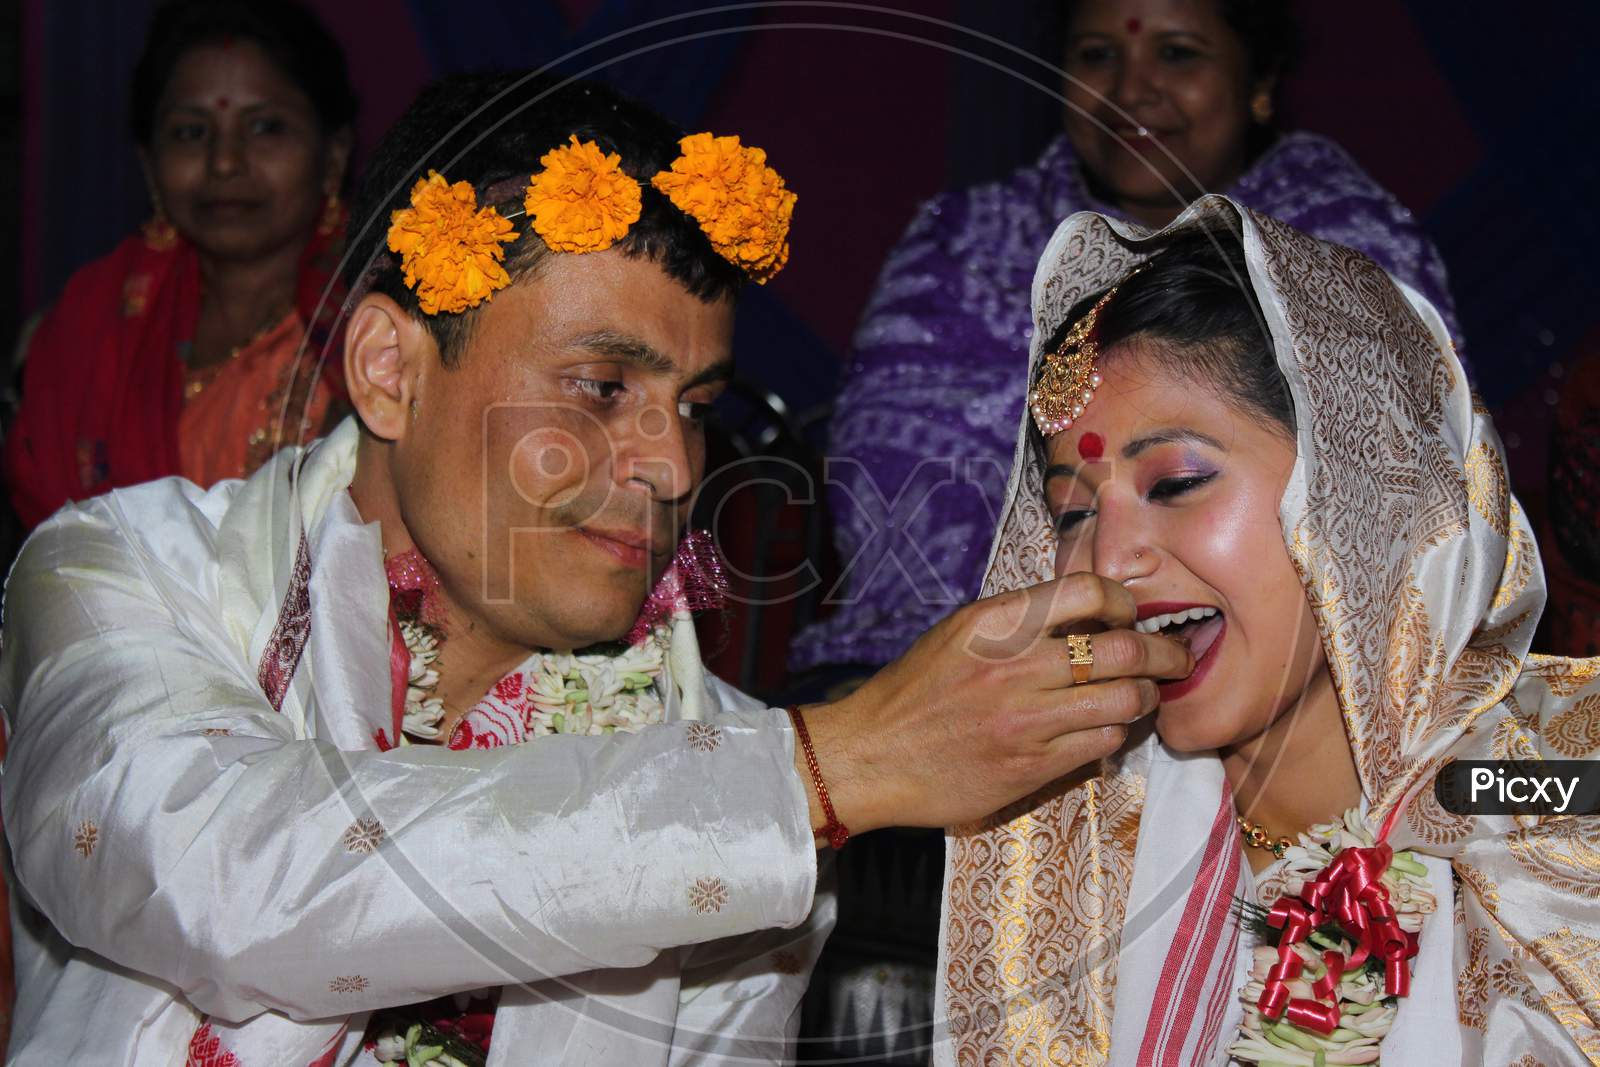 Assam Muslims celebrate weddings with a seasoning of Hindu traditions